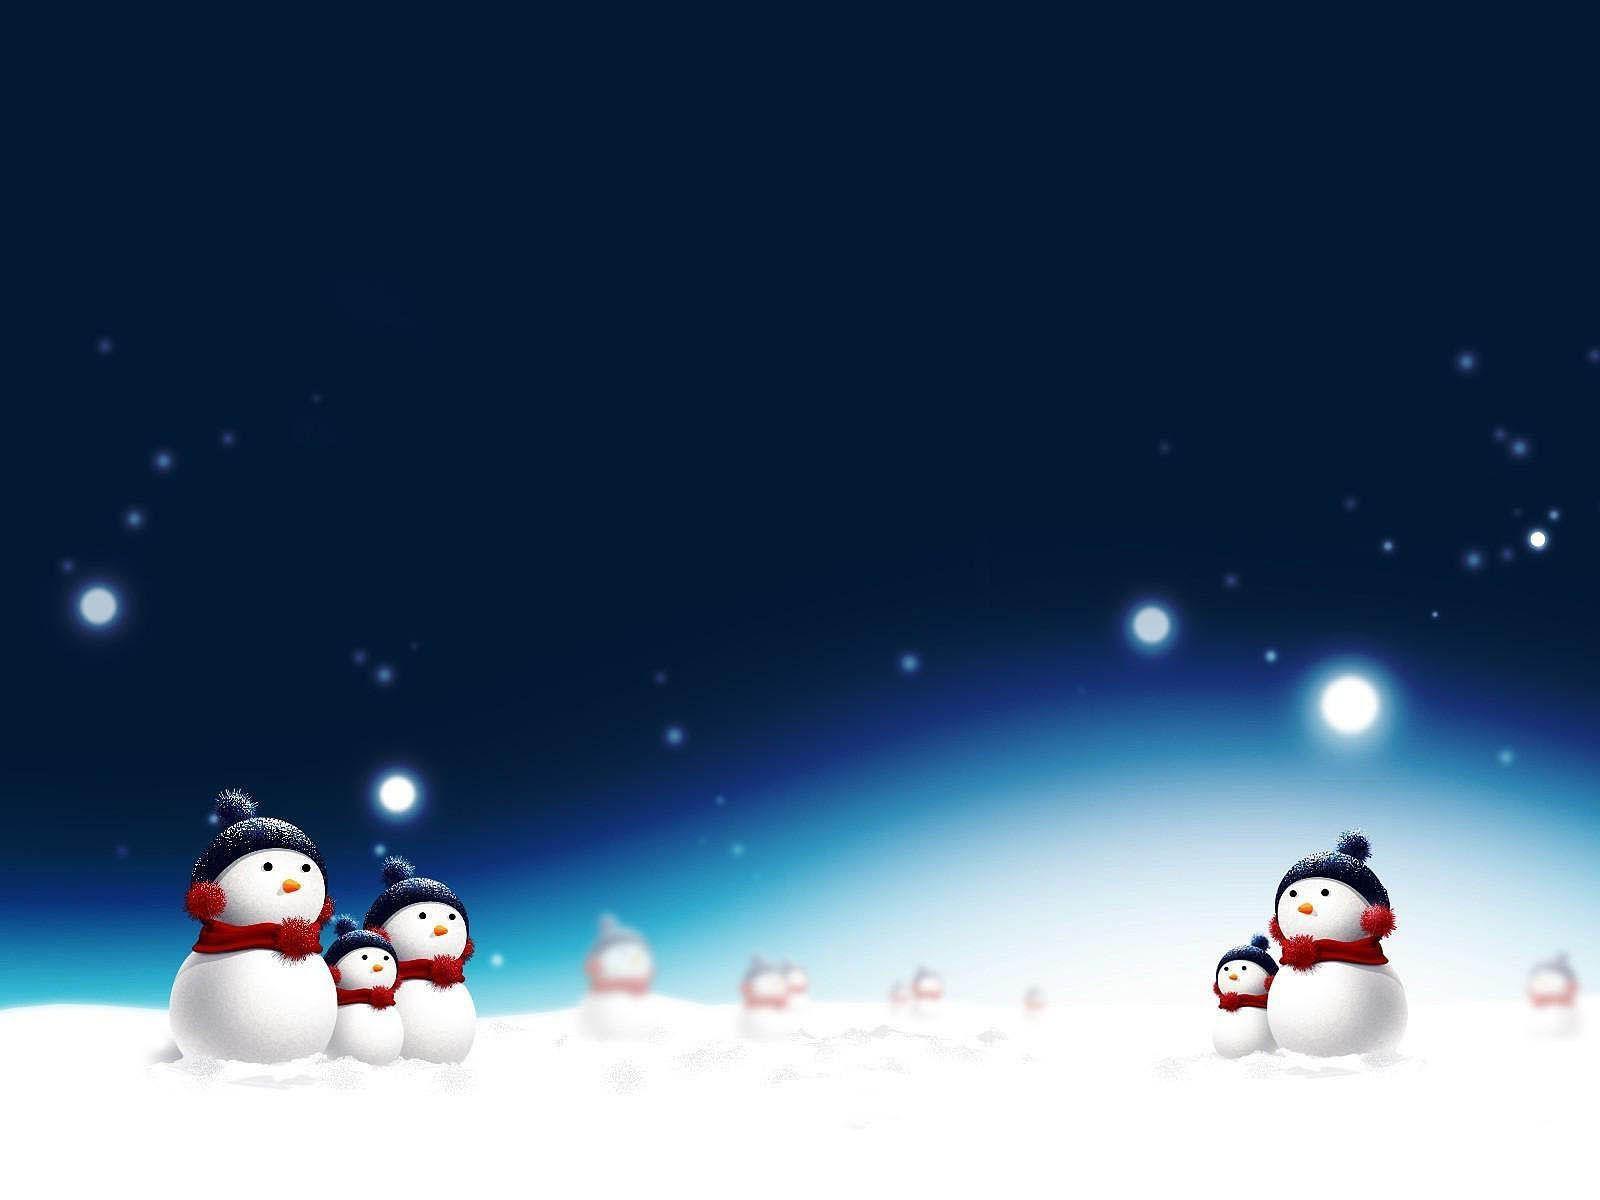 Wallpaper For > Snowman Background For Desktop